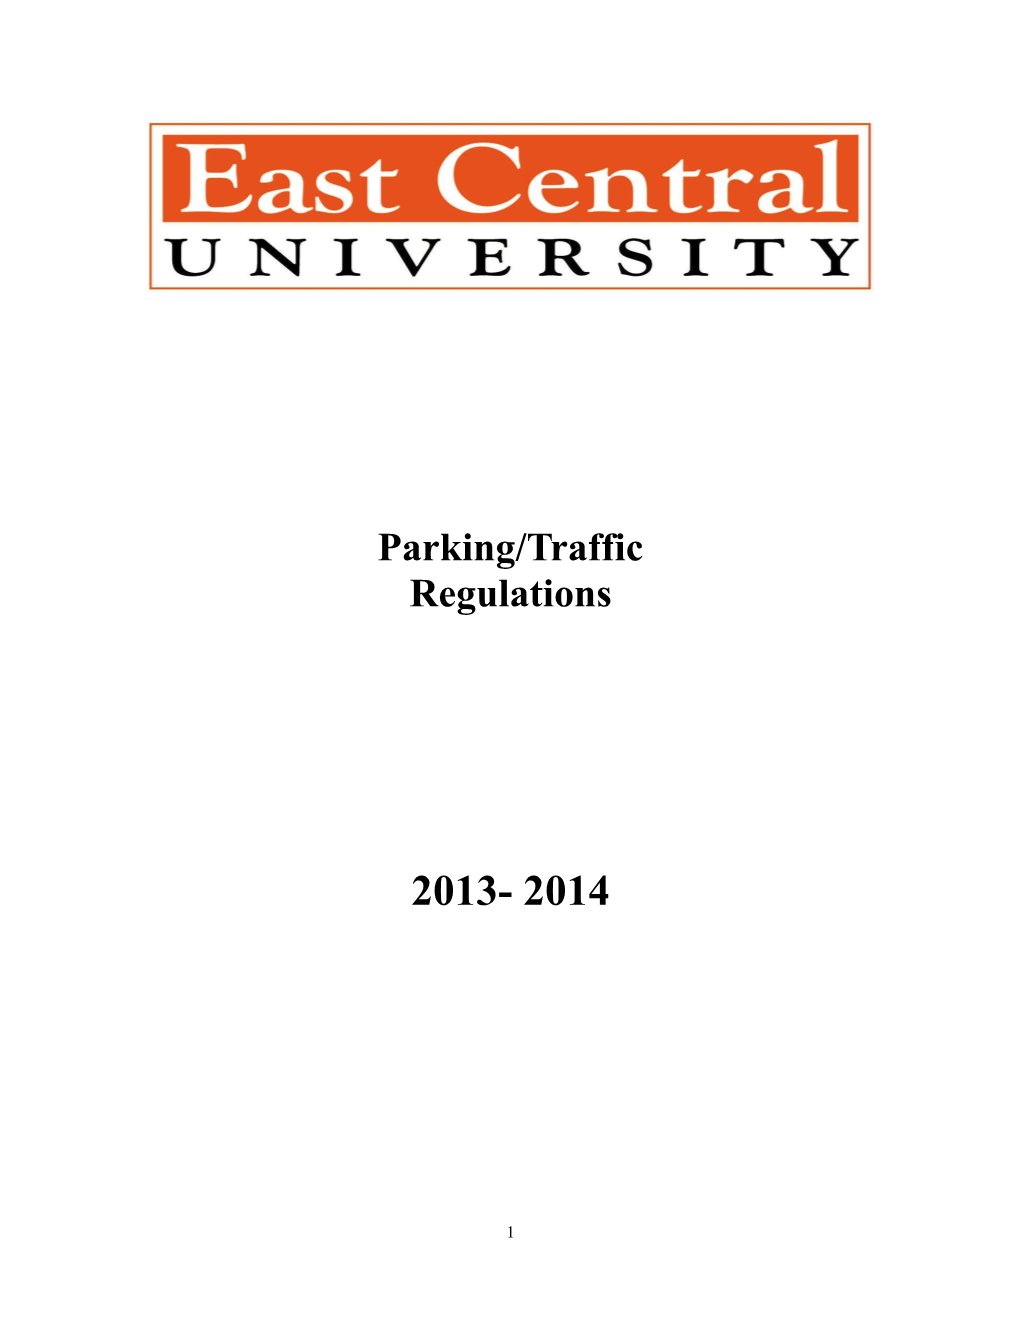 Parking/Traffic Regulations